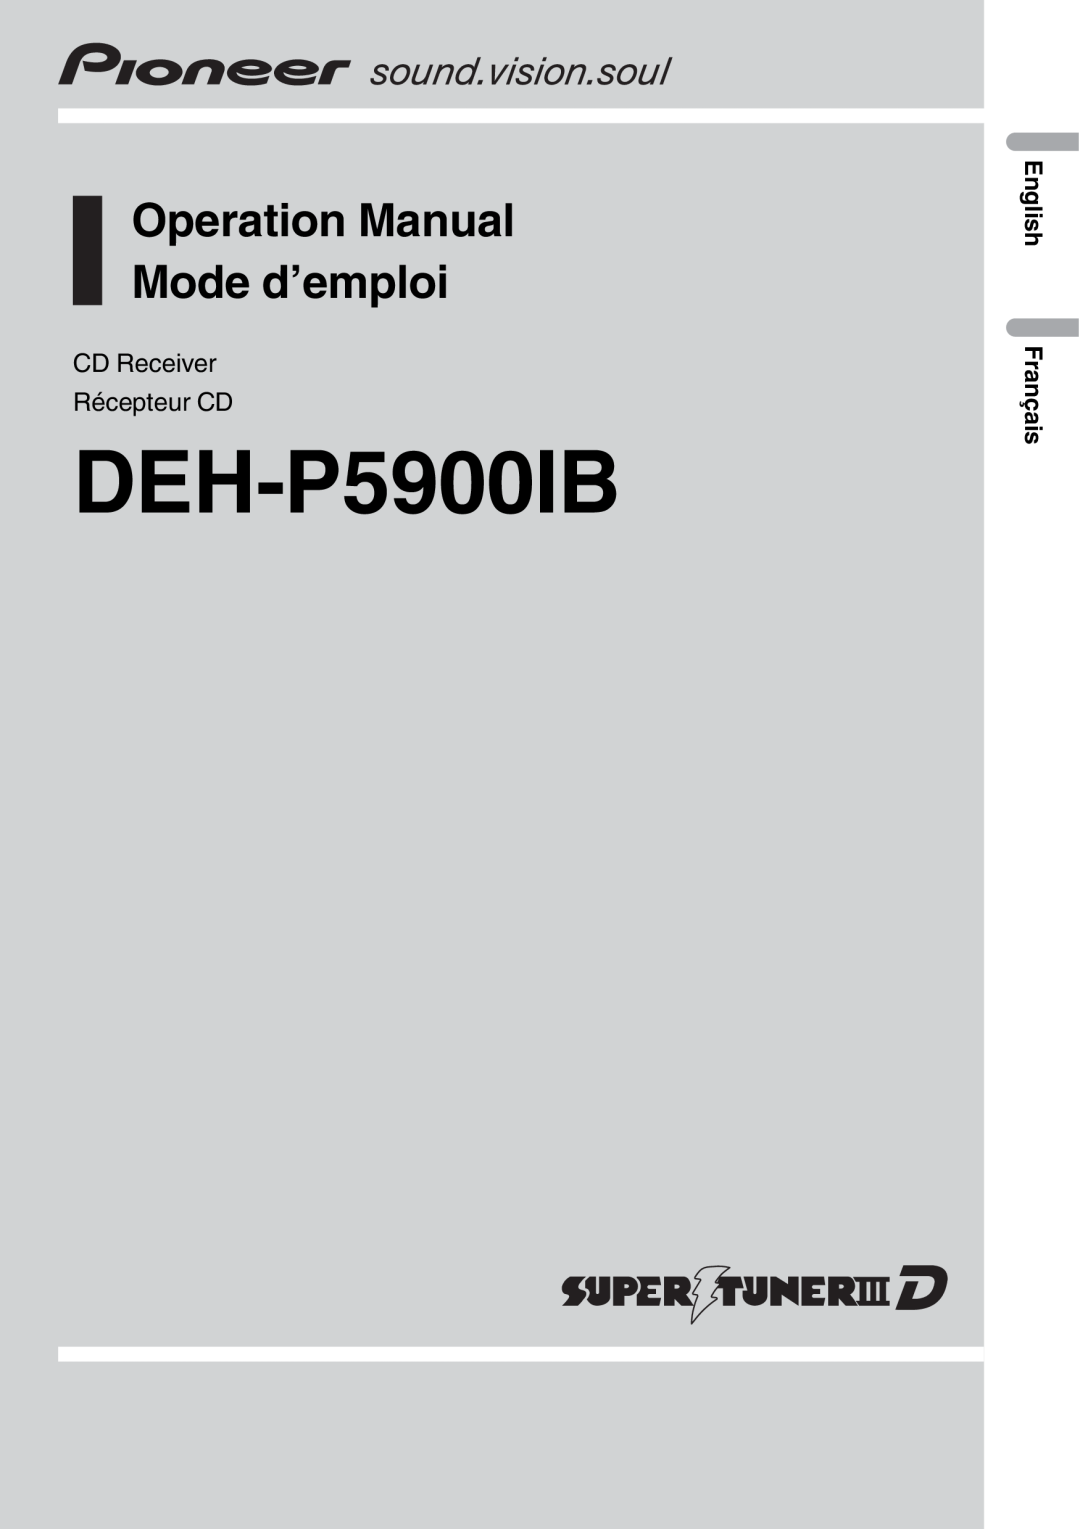 Pioneer DEH-P5900IB operation manual CD Receiver Récepteur CD, English Français, Operation Manual Mode d’emploi 